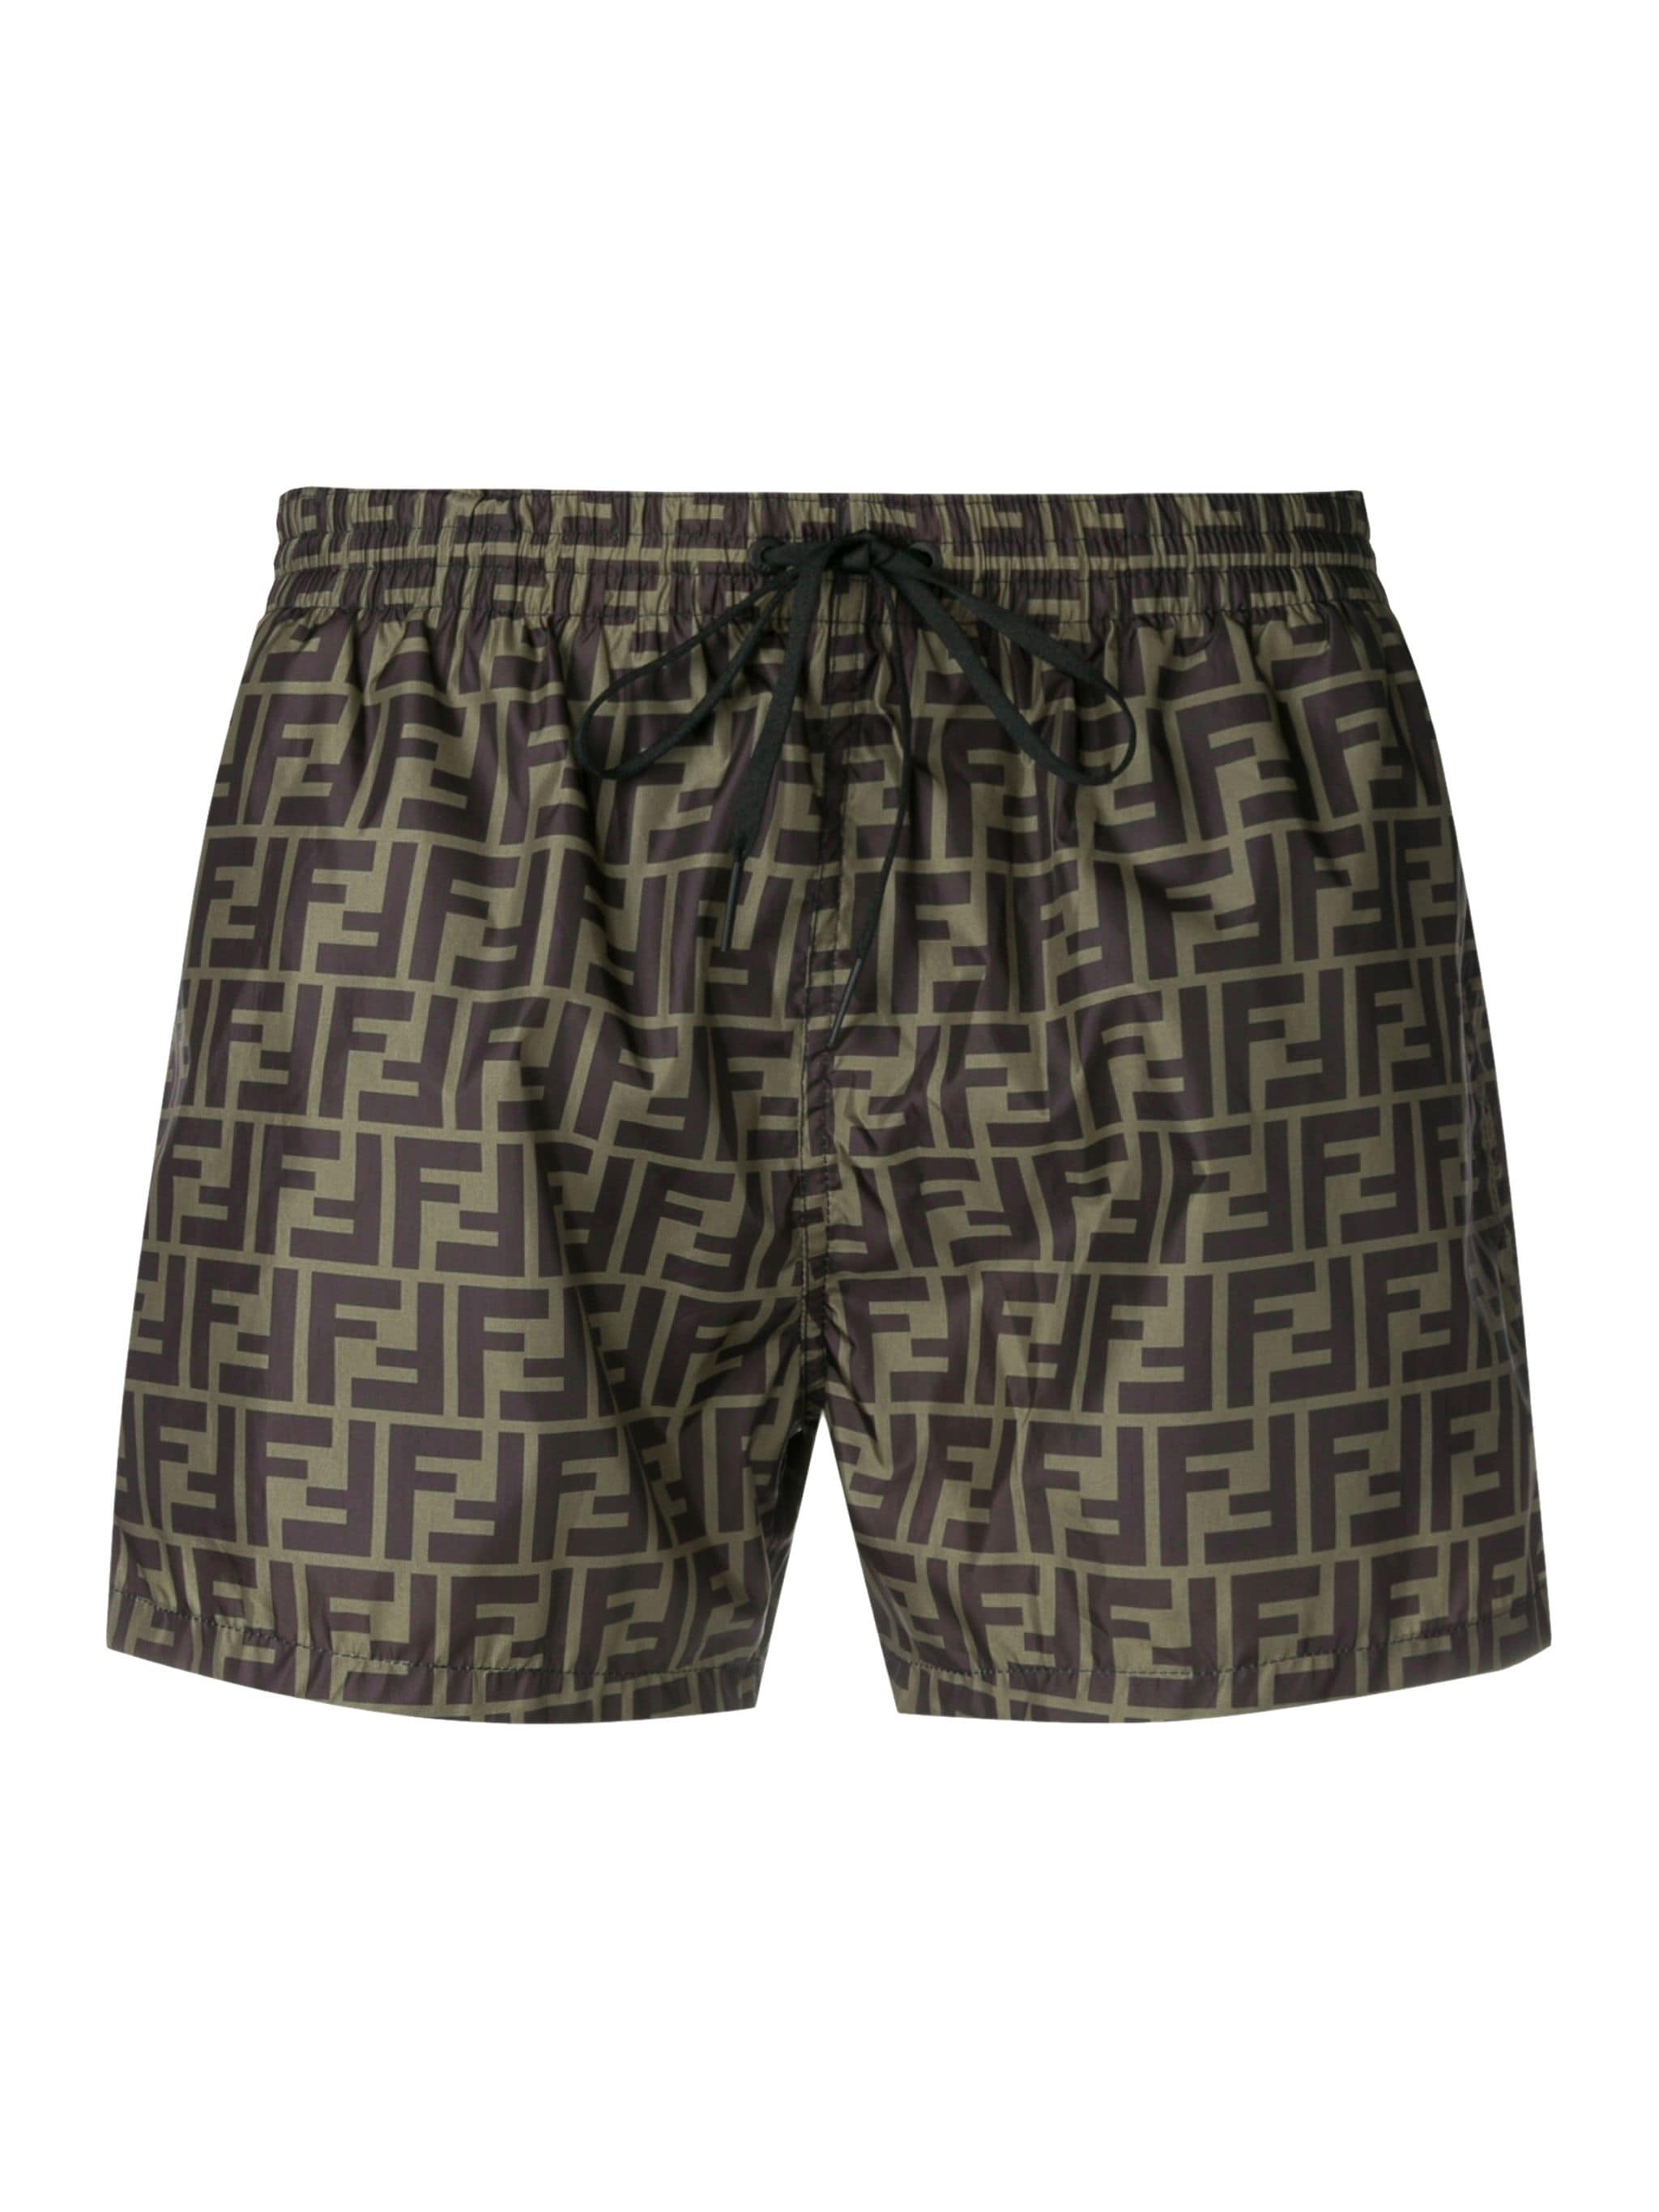 FF motif swim shorts - 1